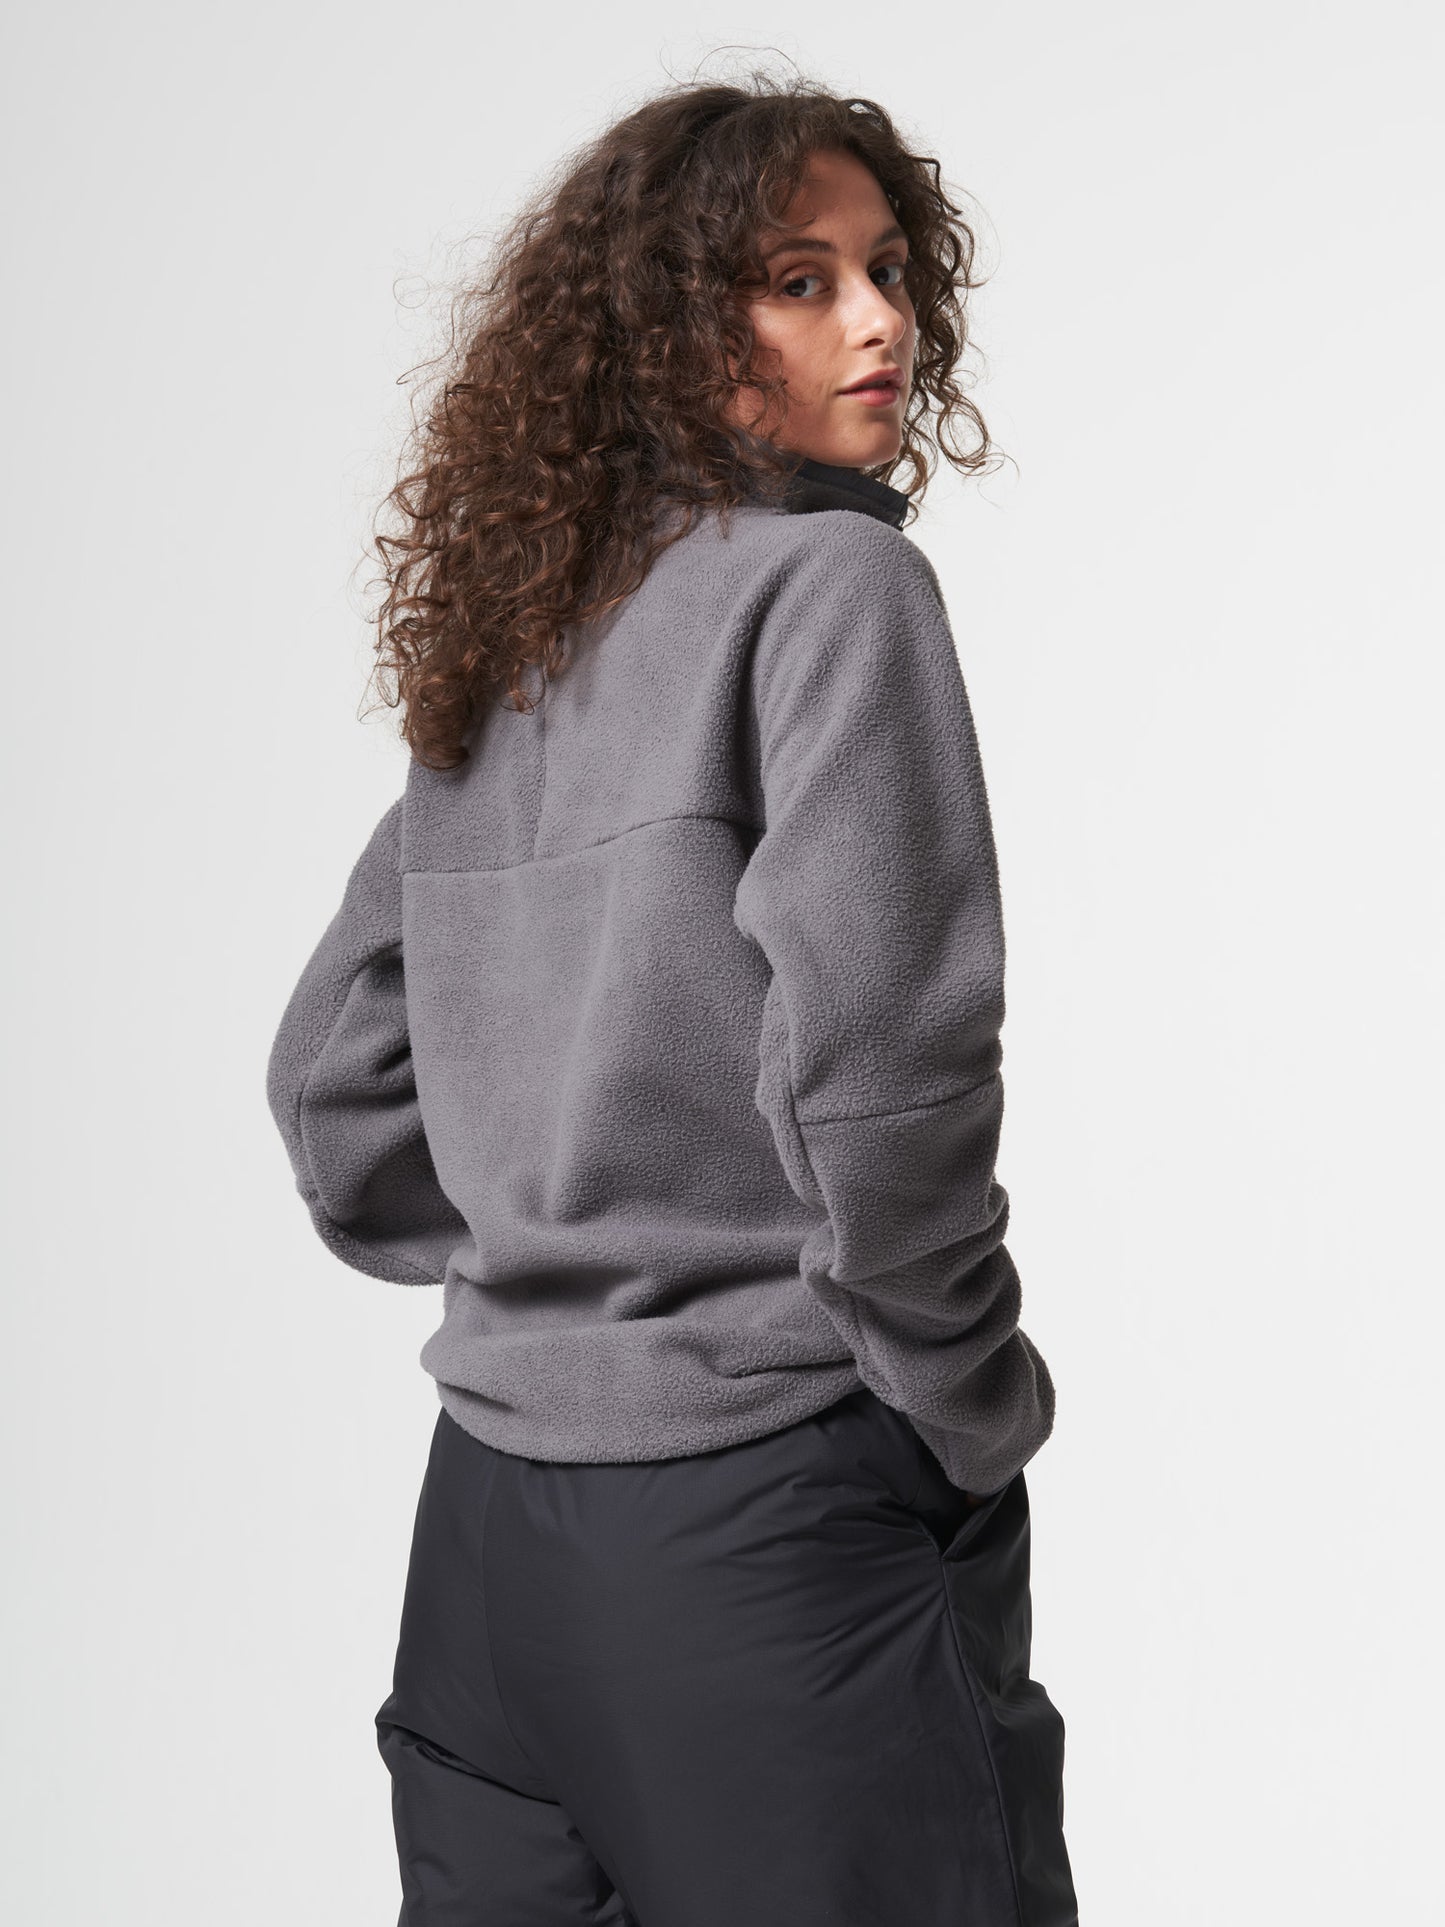 pinqponq-Fleece-Pullover-Graphite-Grey-model-back